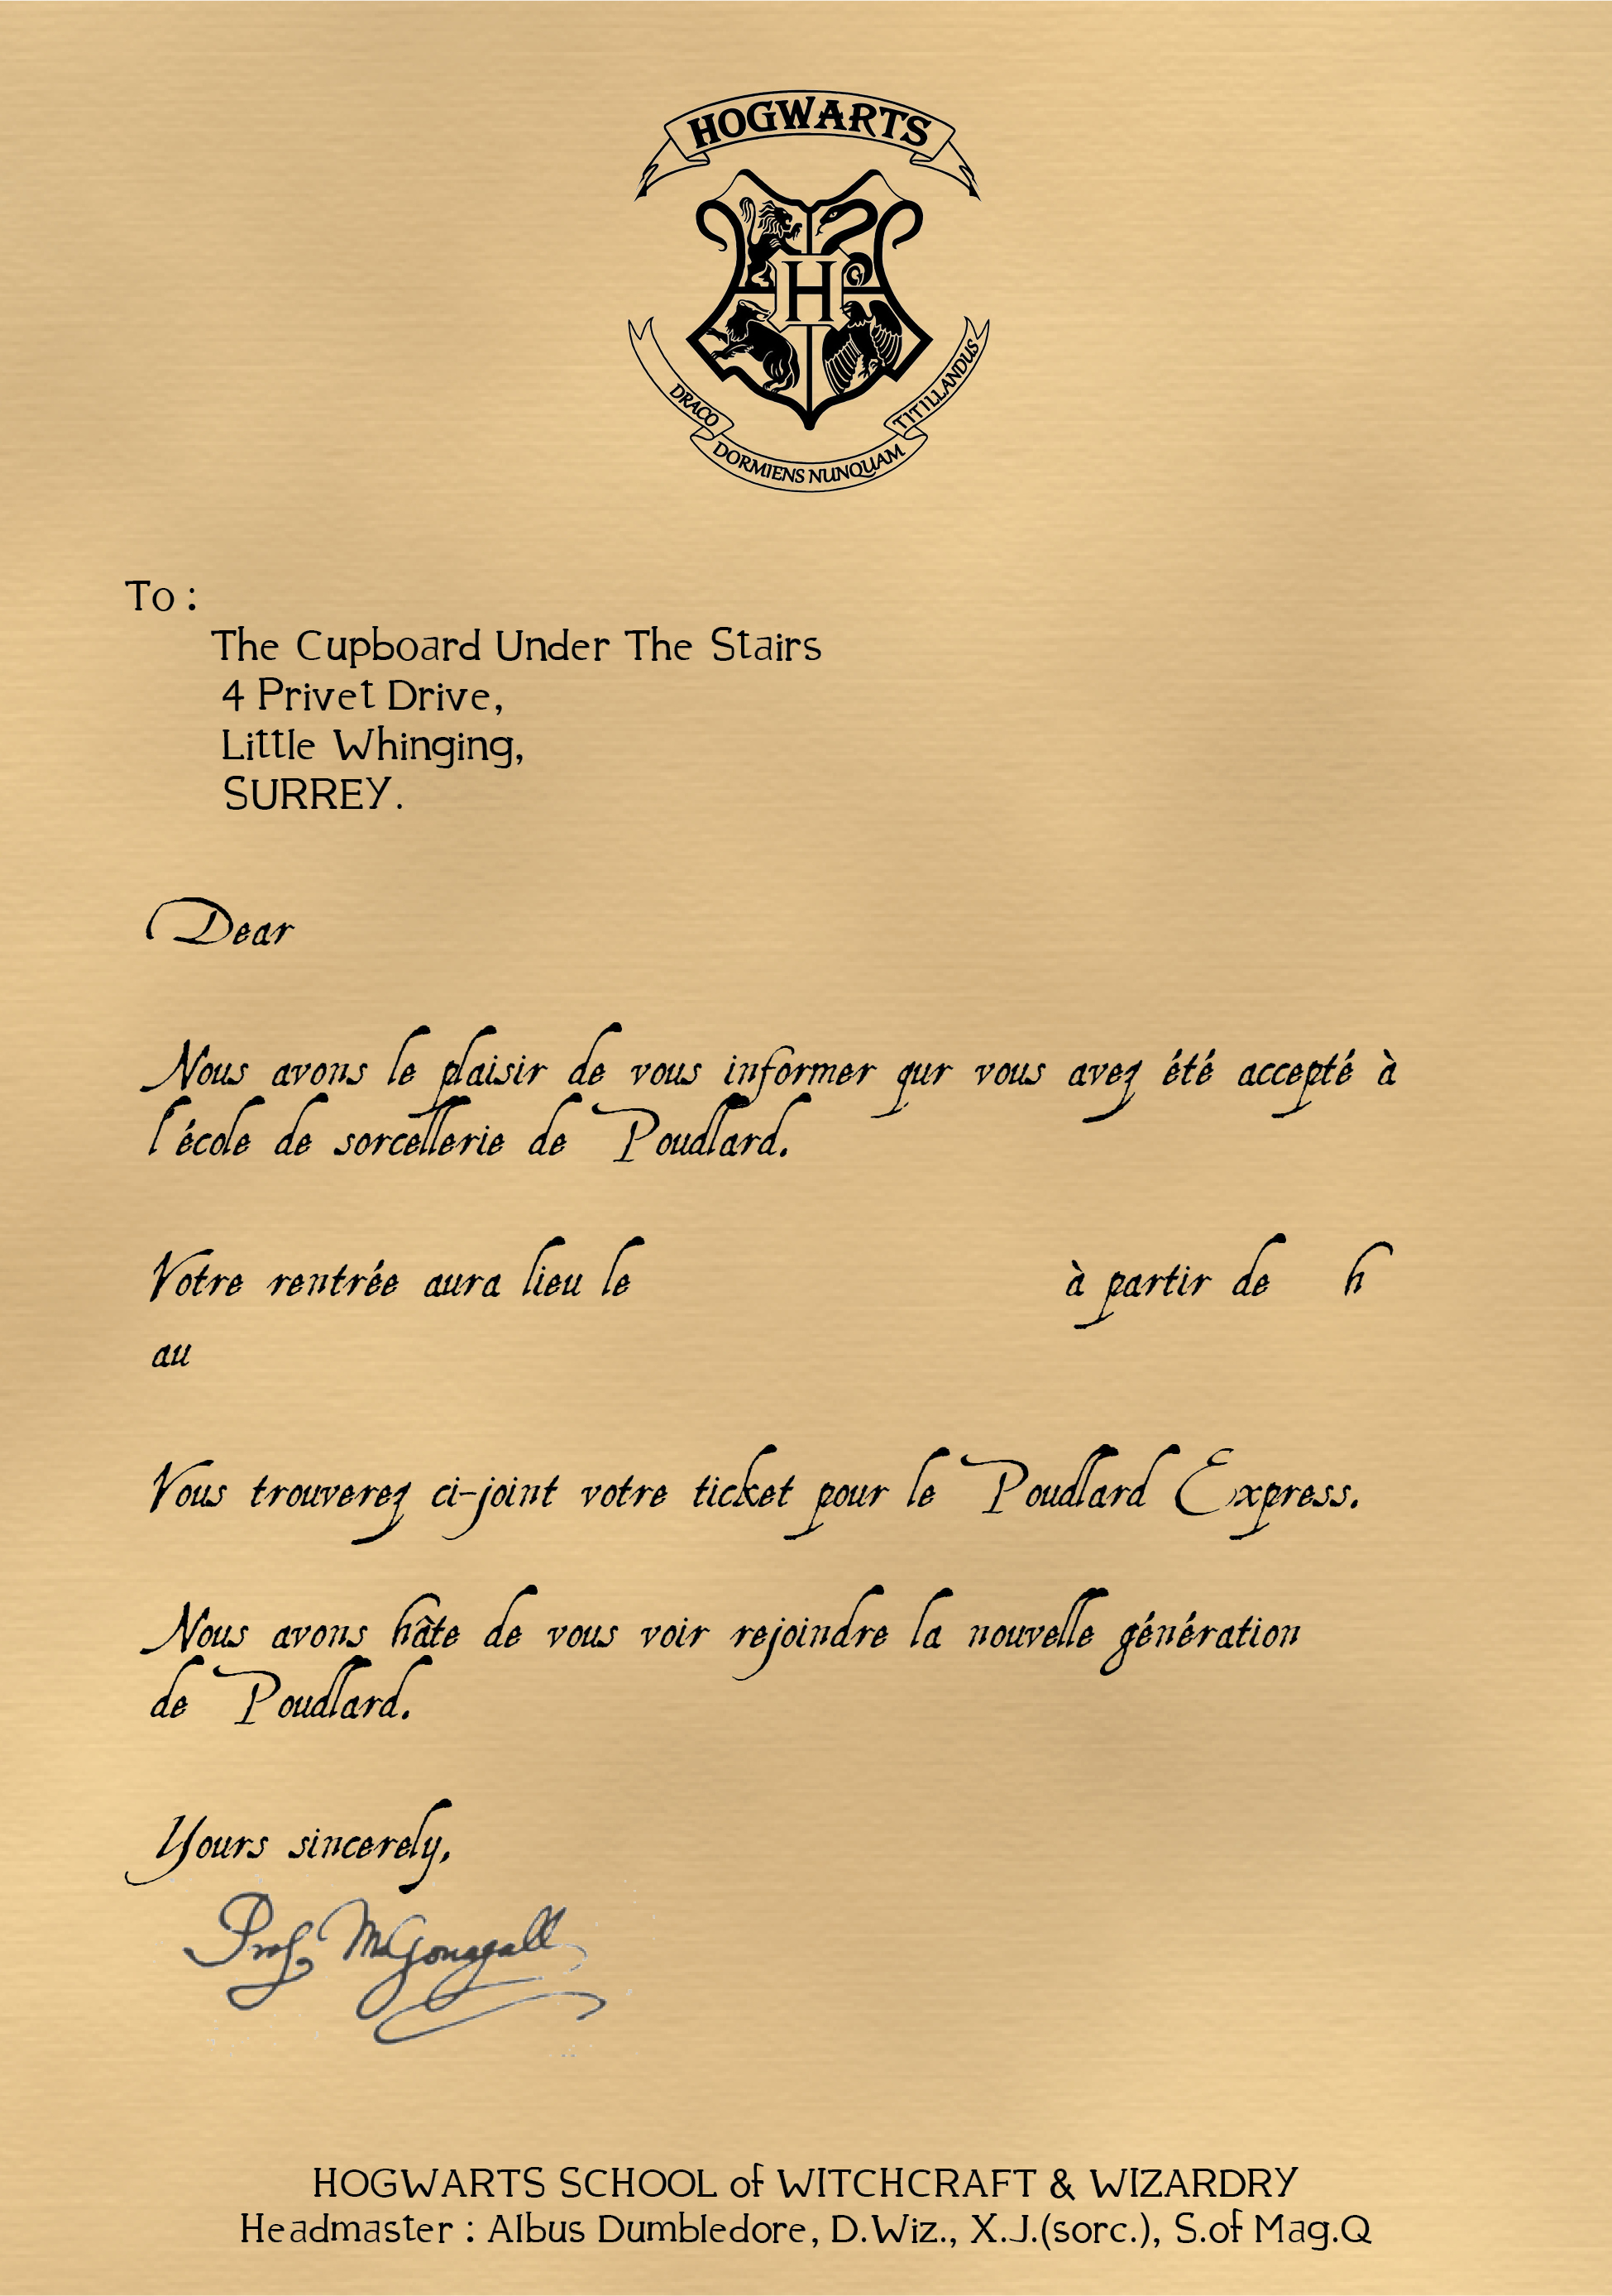 Invitation Anniversaire Harry Potter